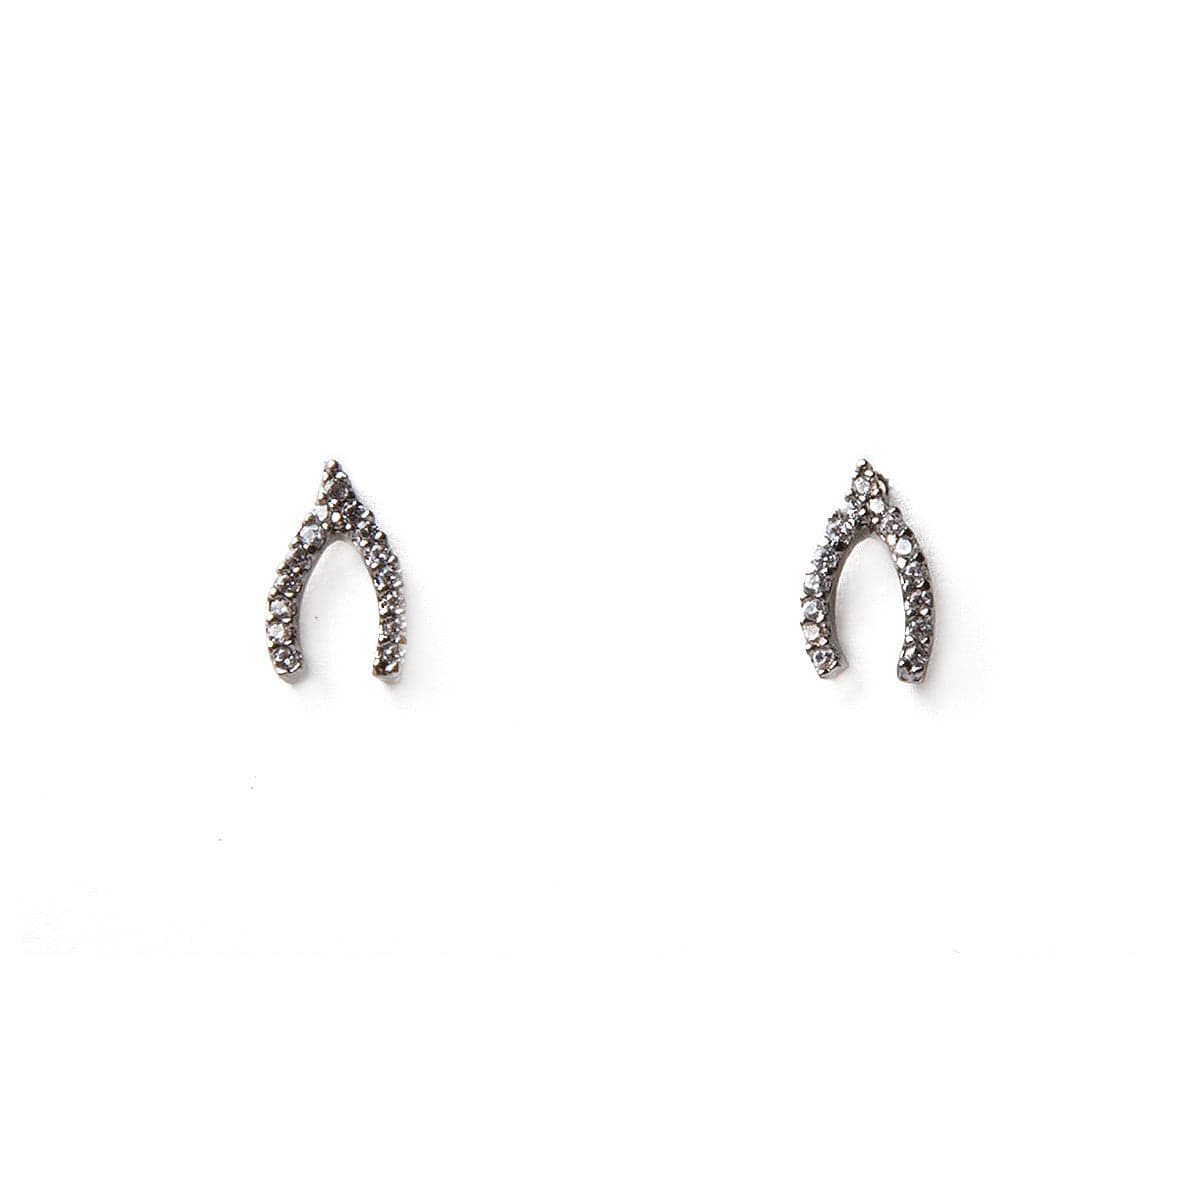 TAI JEWELRY Earrings OXIDIZED SILVER Pave Mini Wishbone Earrings